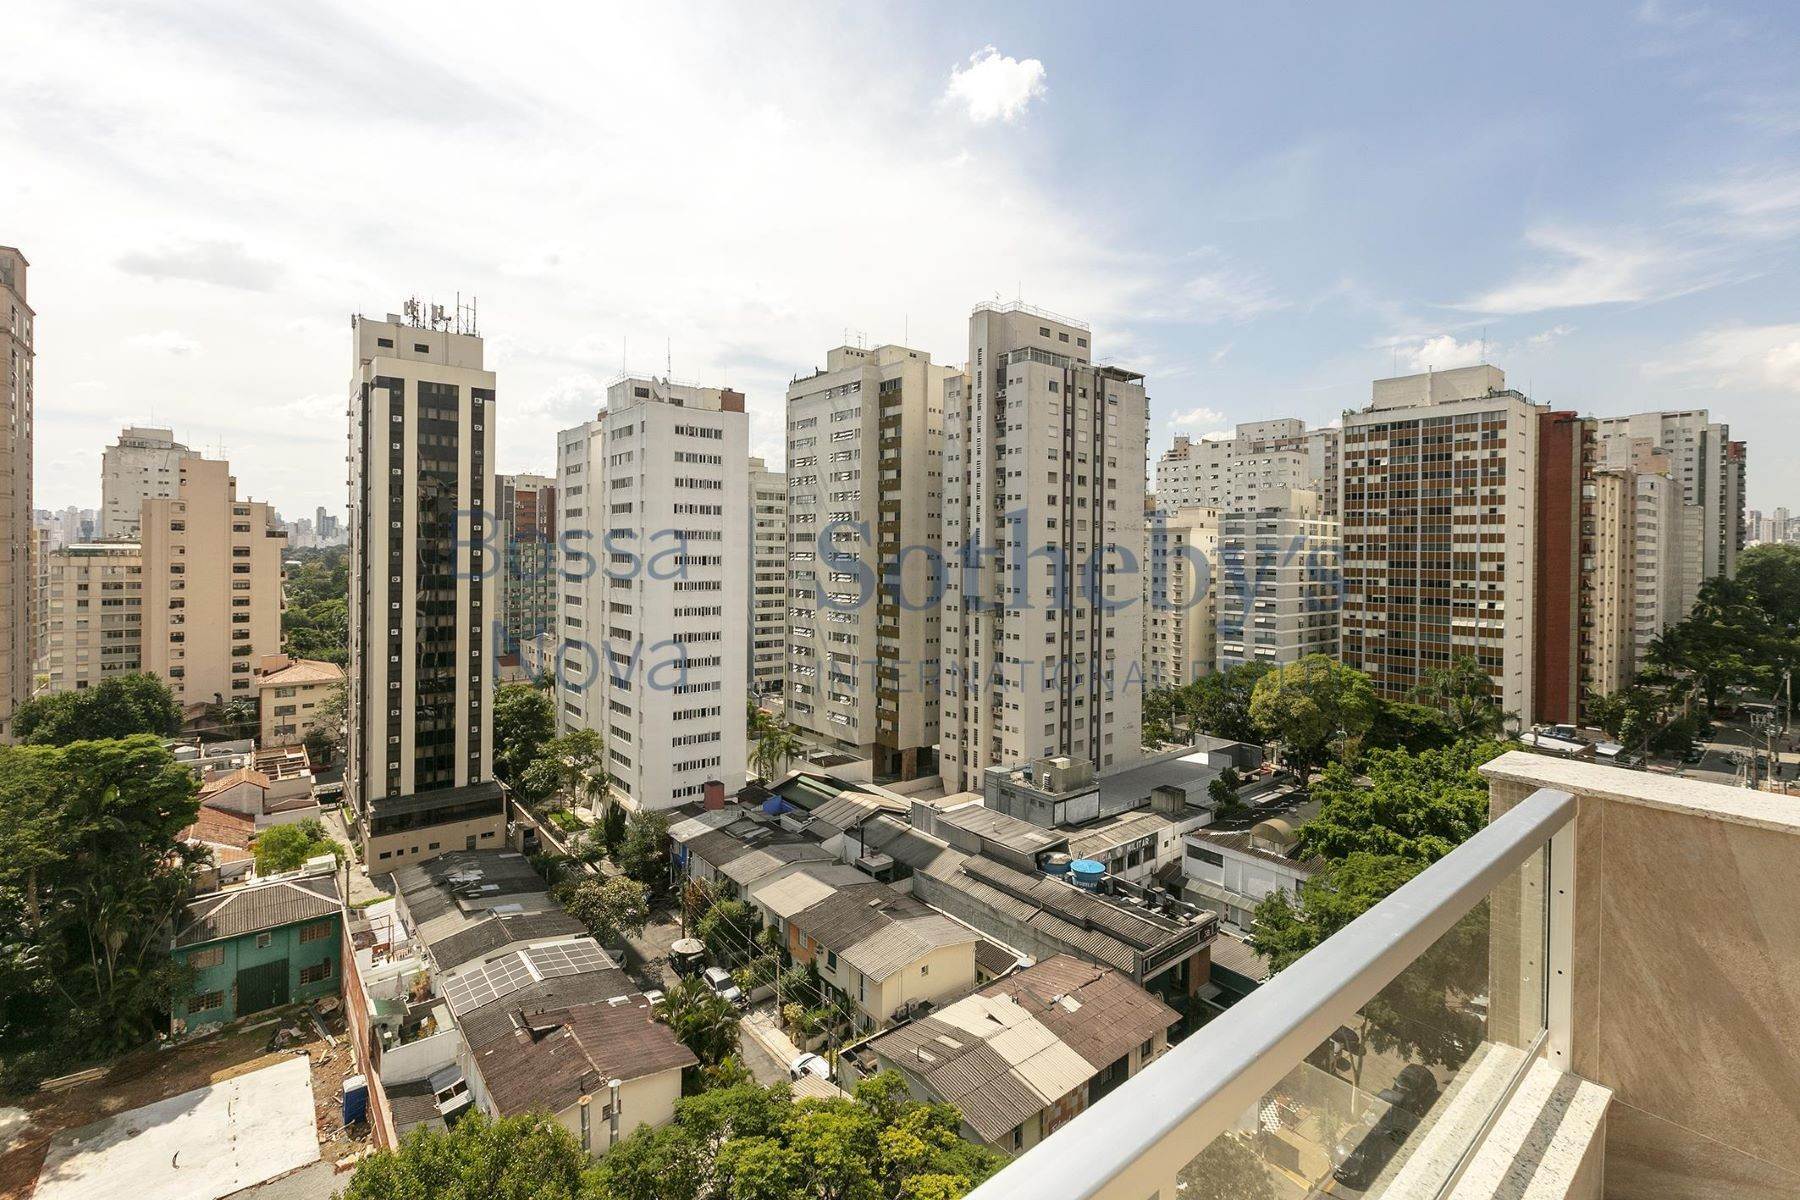 4. Duplex Homes at Itaim, Sao Paulo, Sao Paulo Brazil